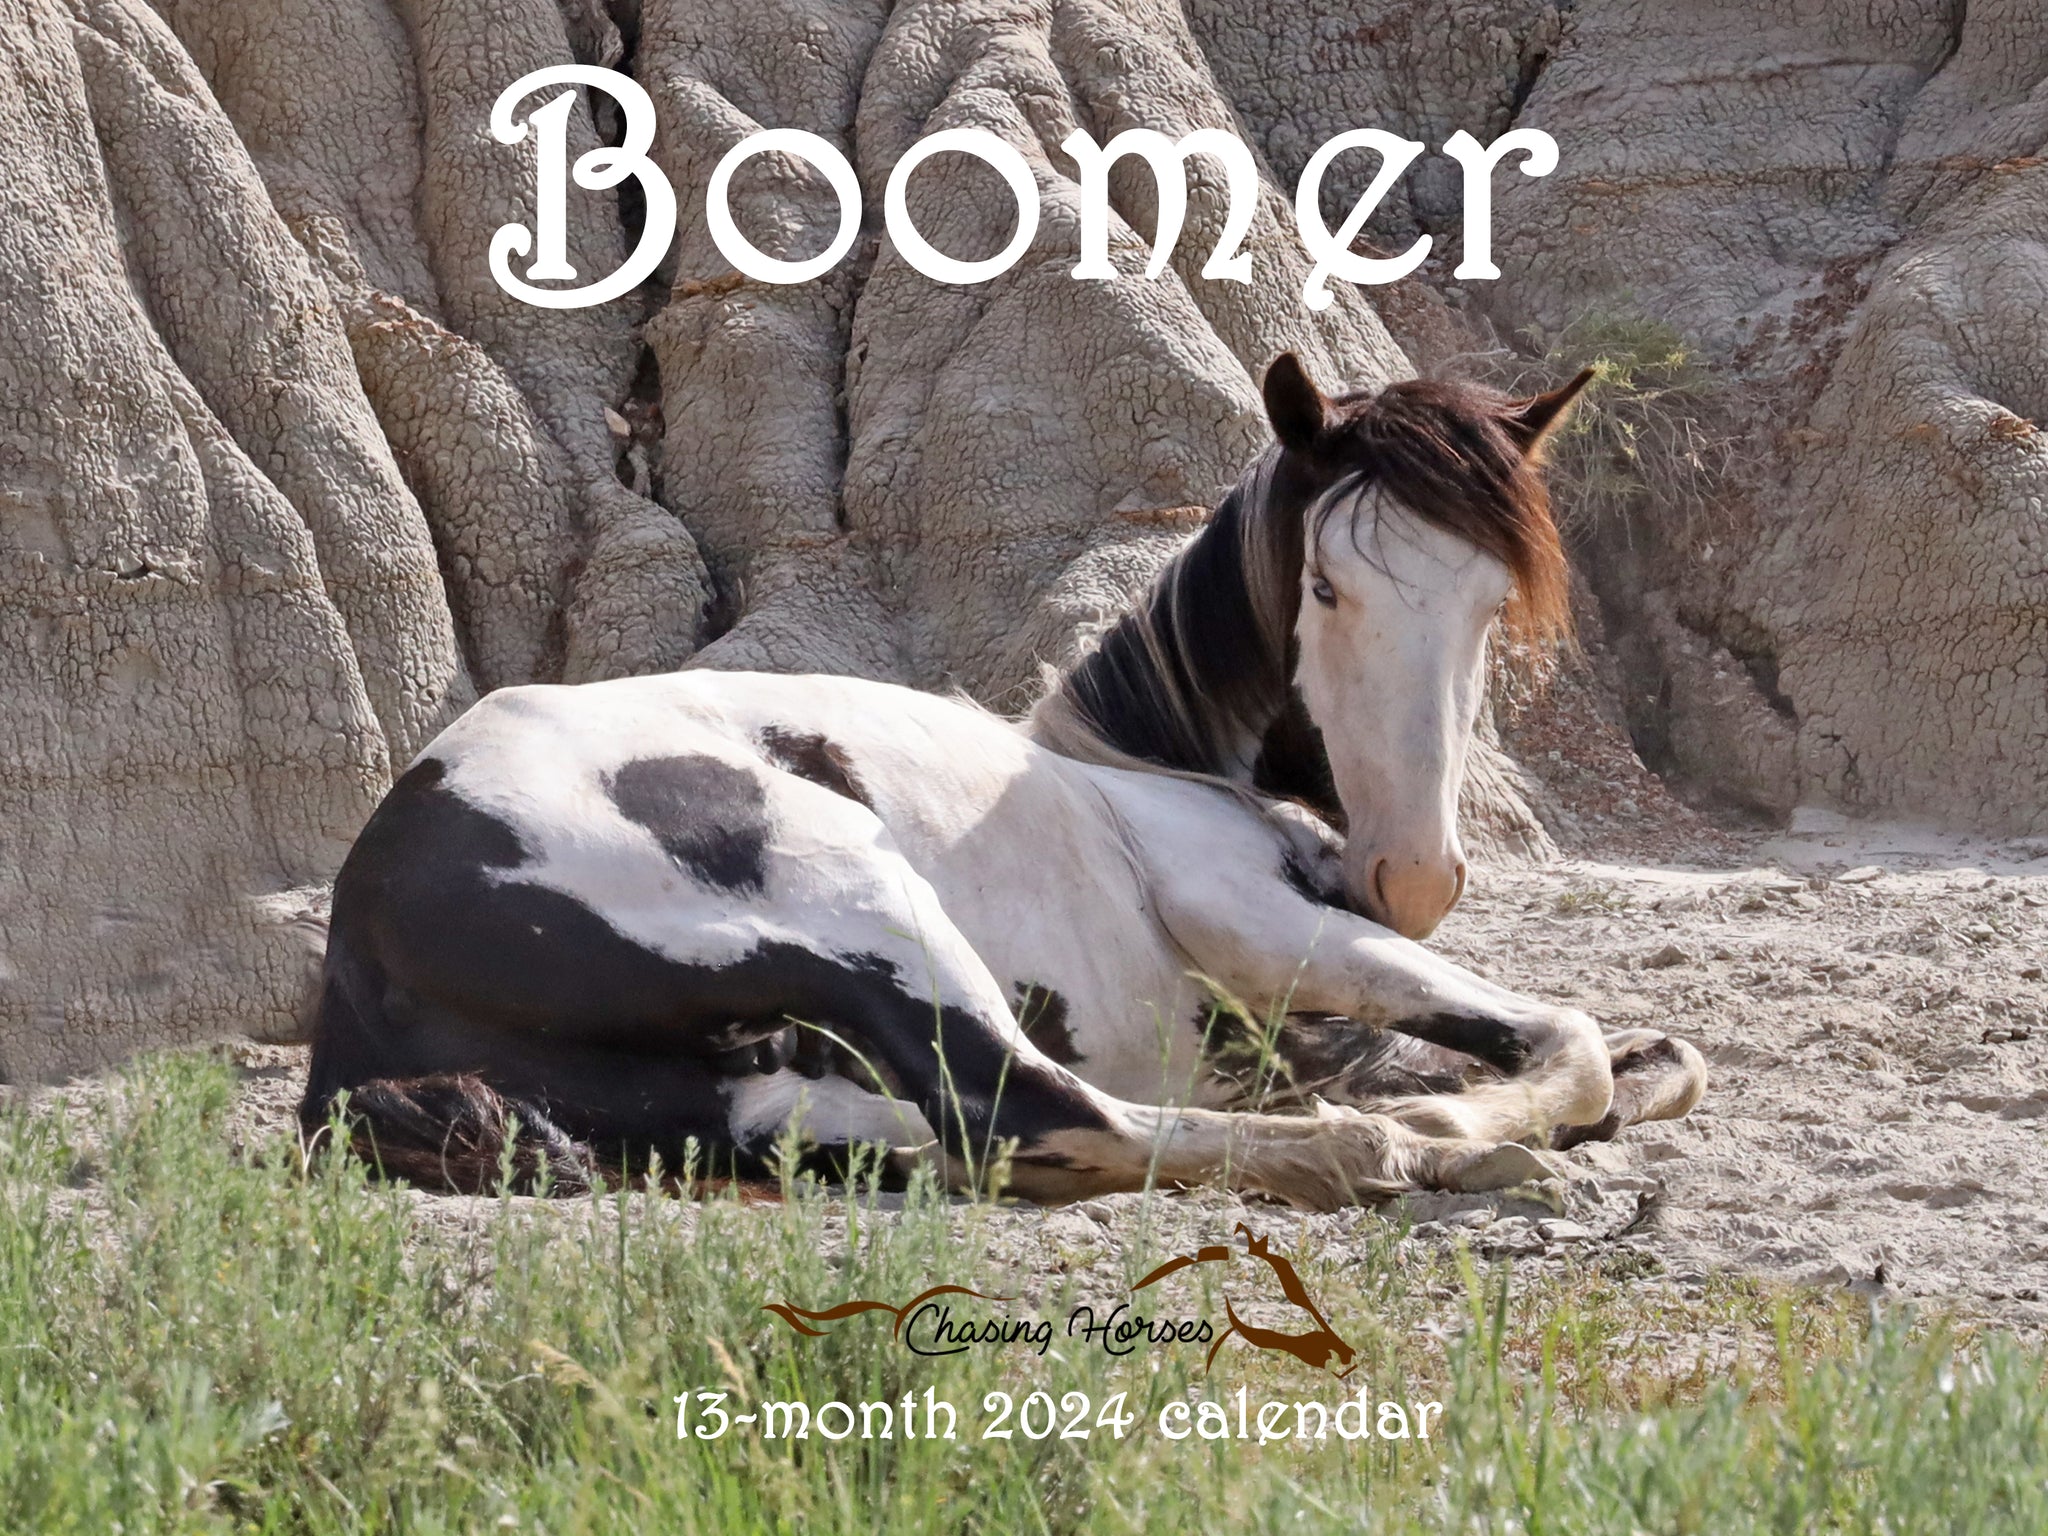 2024 Chasing Horses 13-month calendars